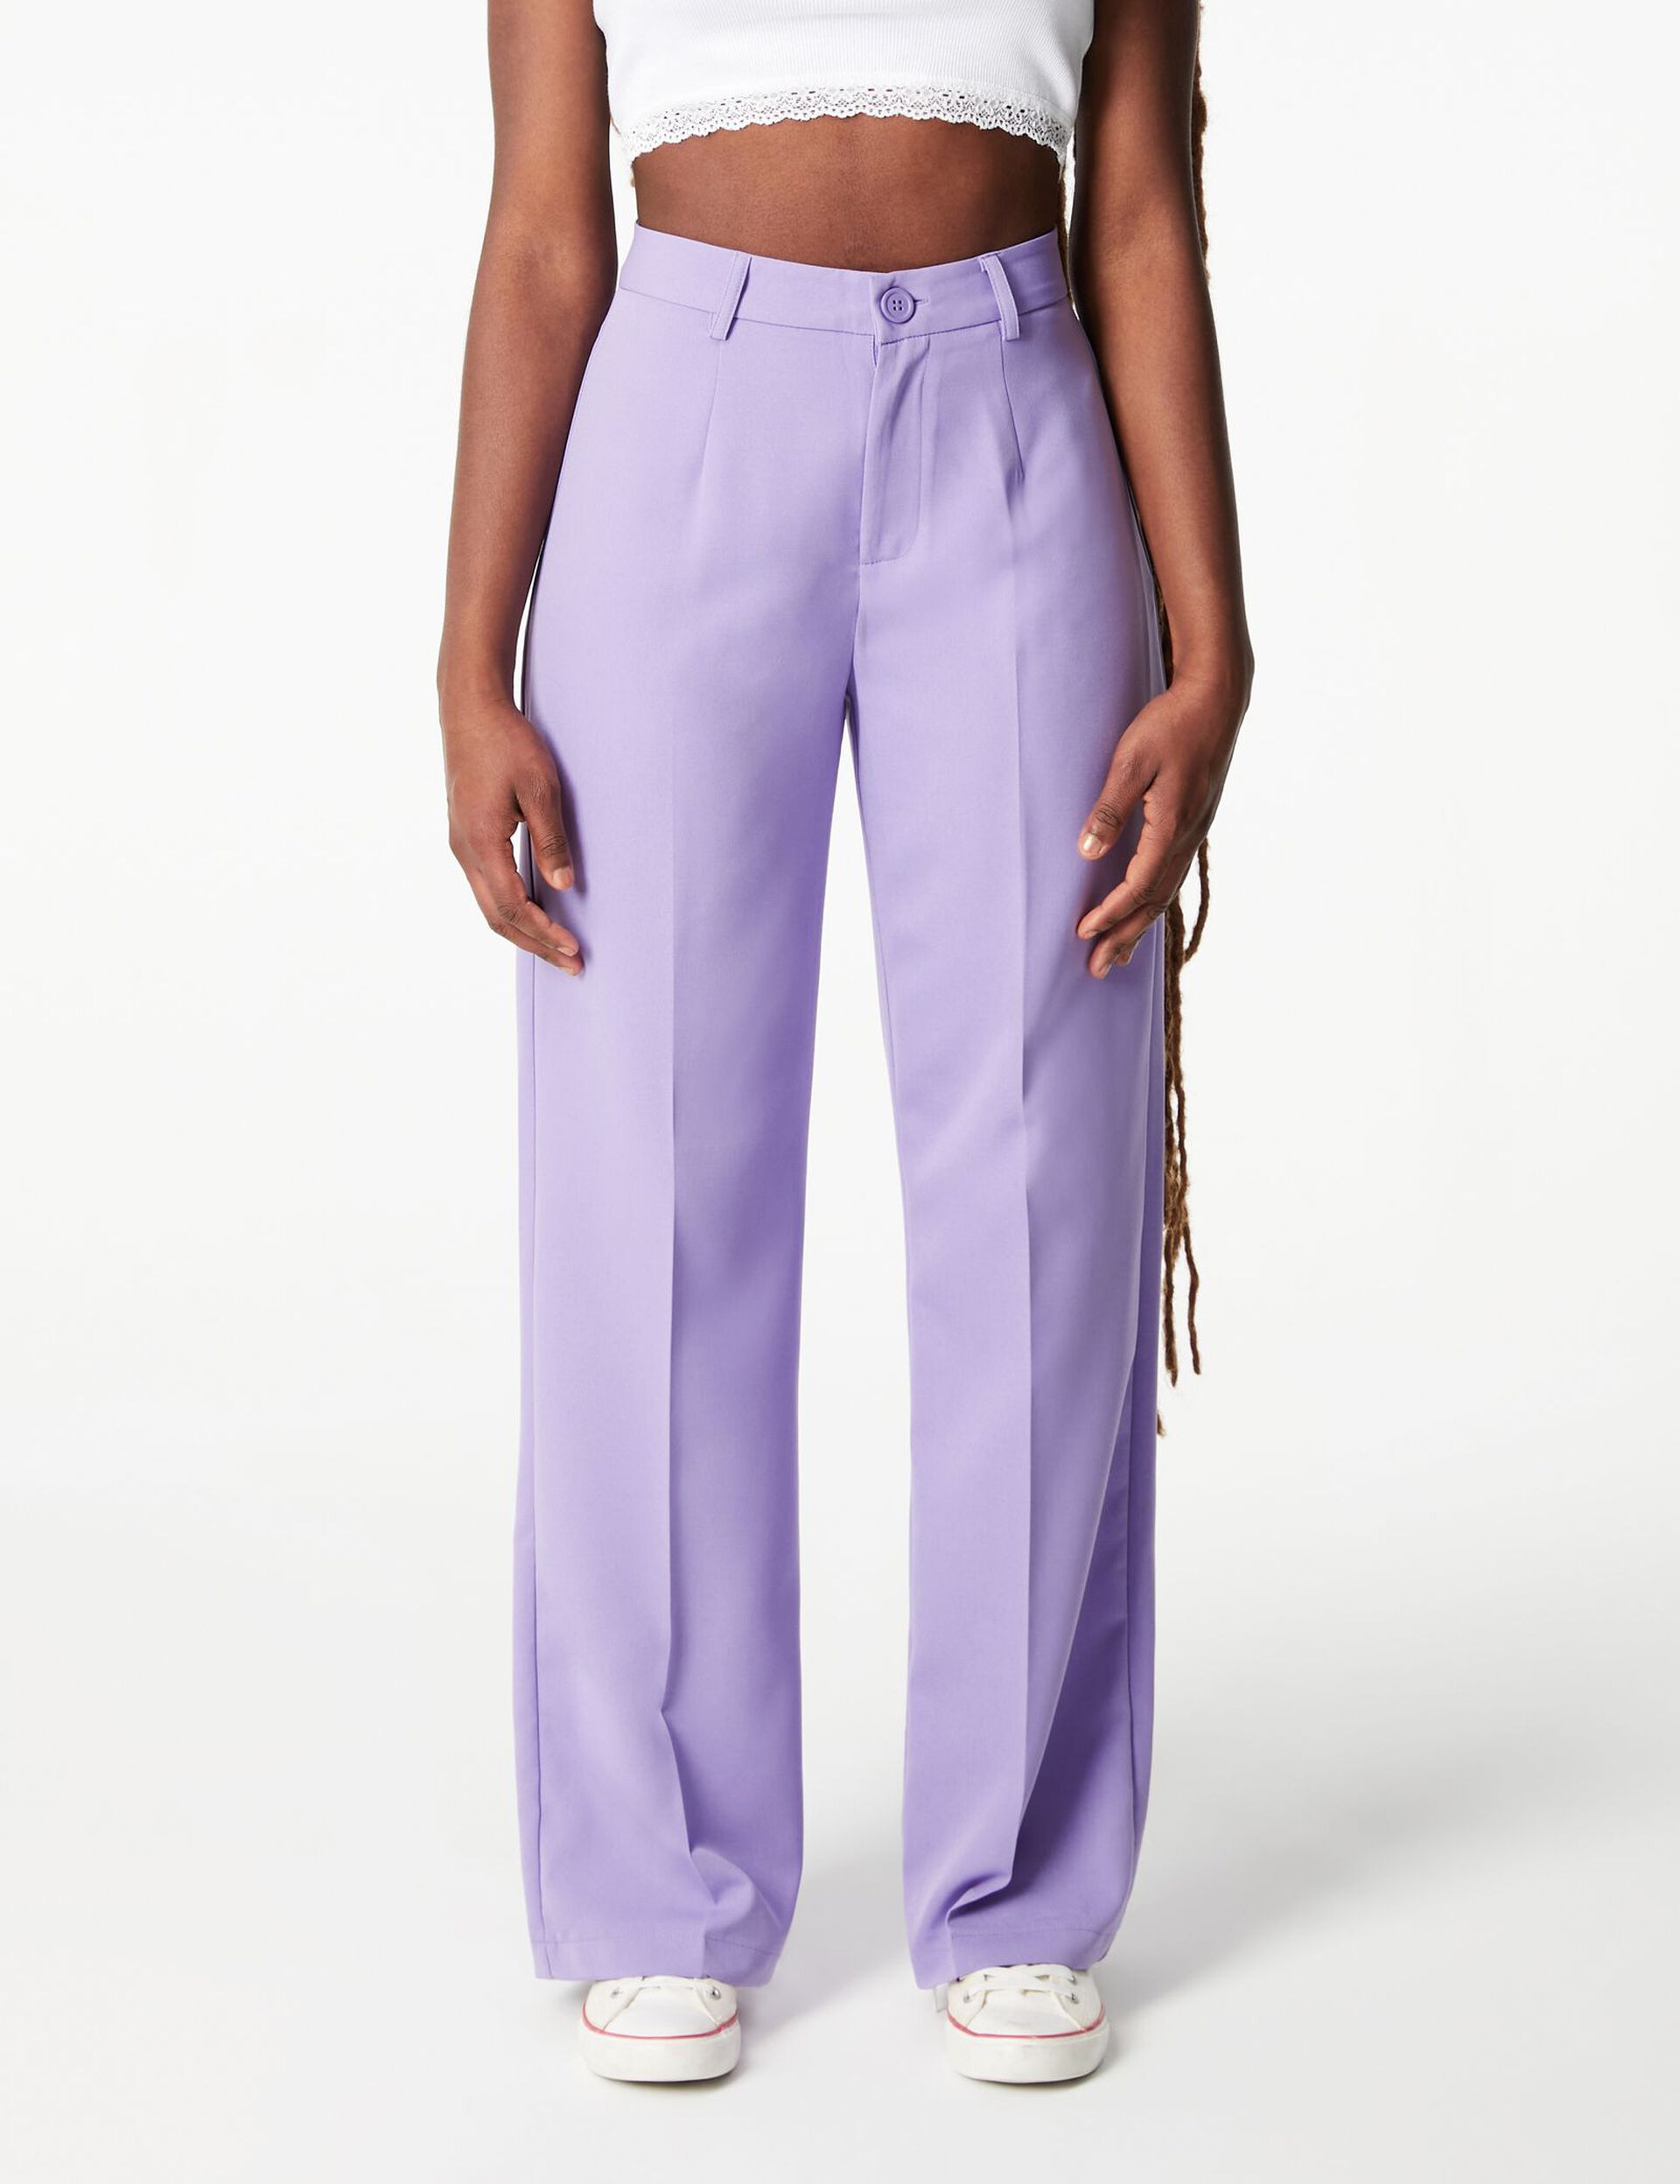 Pantalon palazzo violet